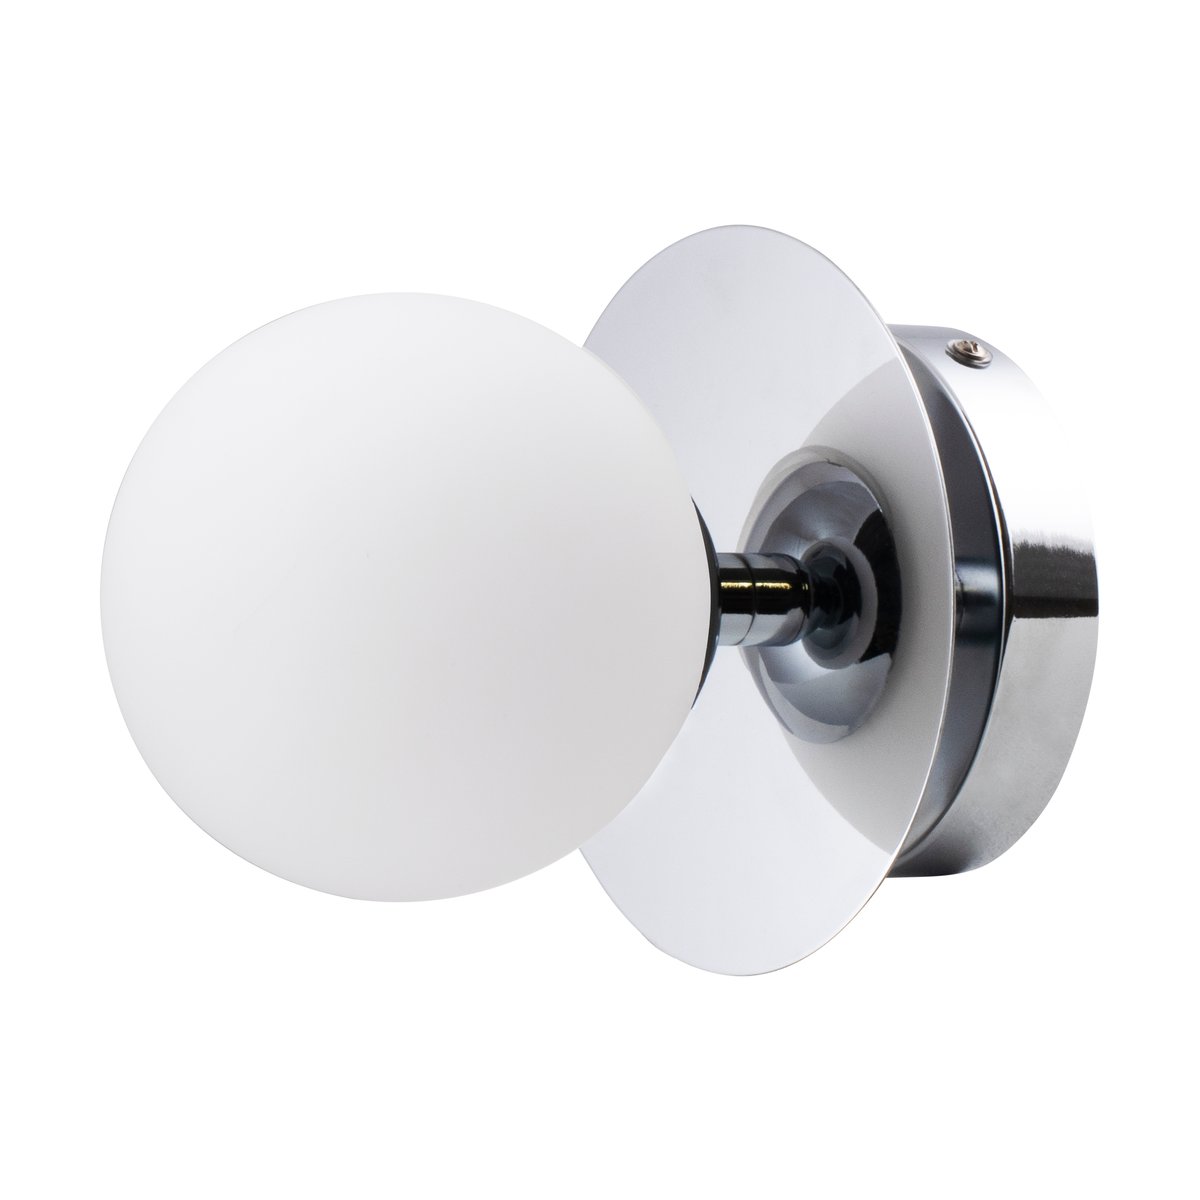 Globen Lighting Art Deco IP44 wandlamp/plafondlamp Chroom-Wit